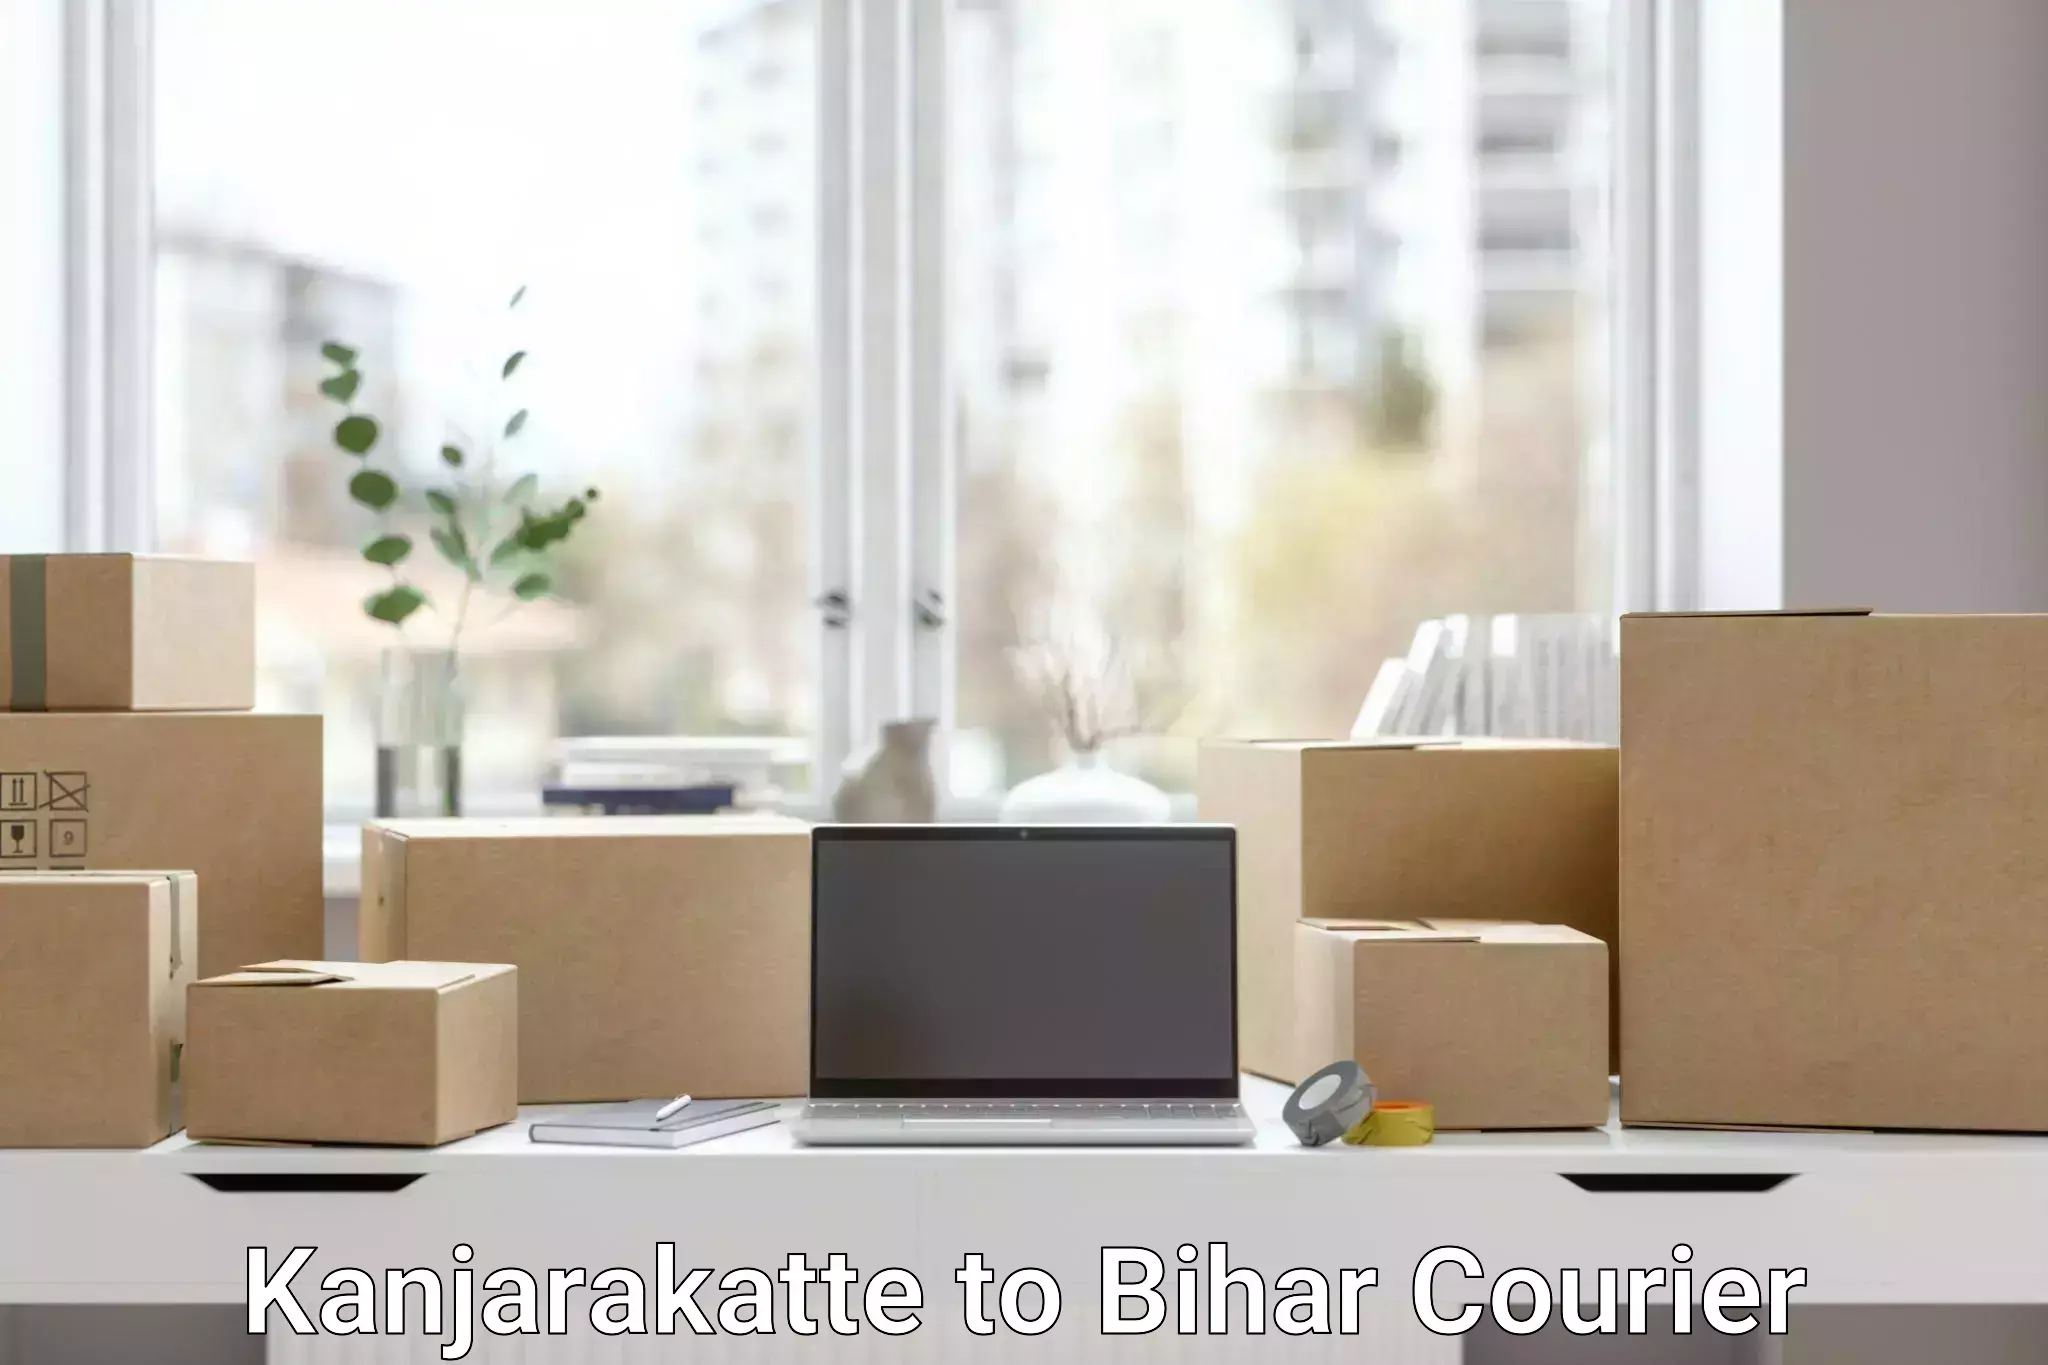 Custom courier strategies Kanjarakatte to Bihar